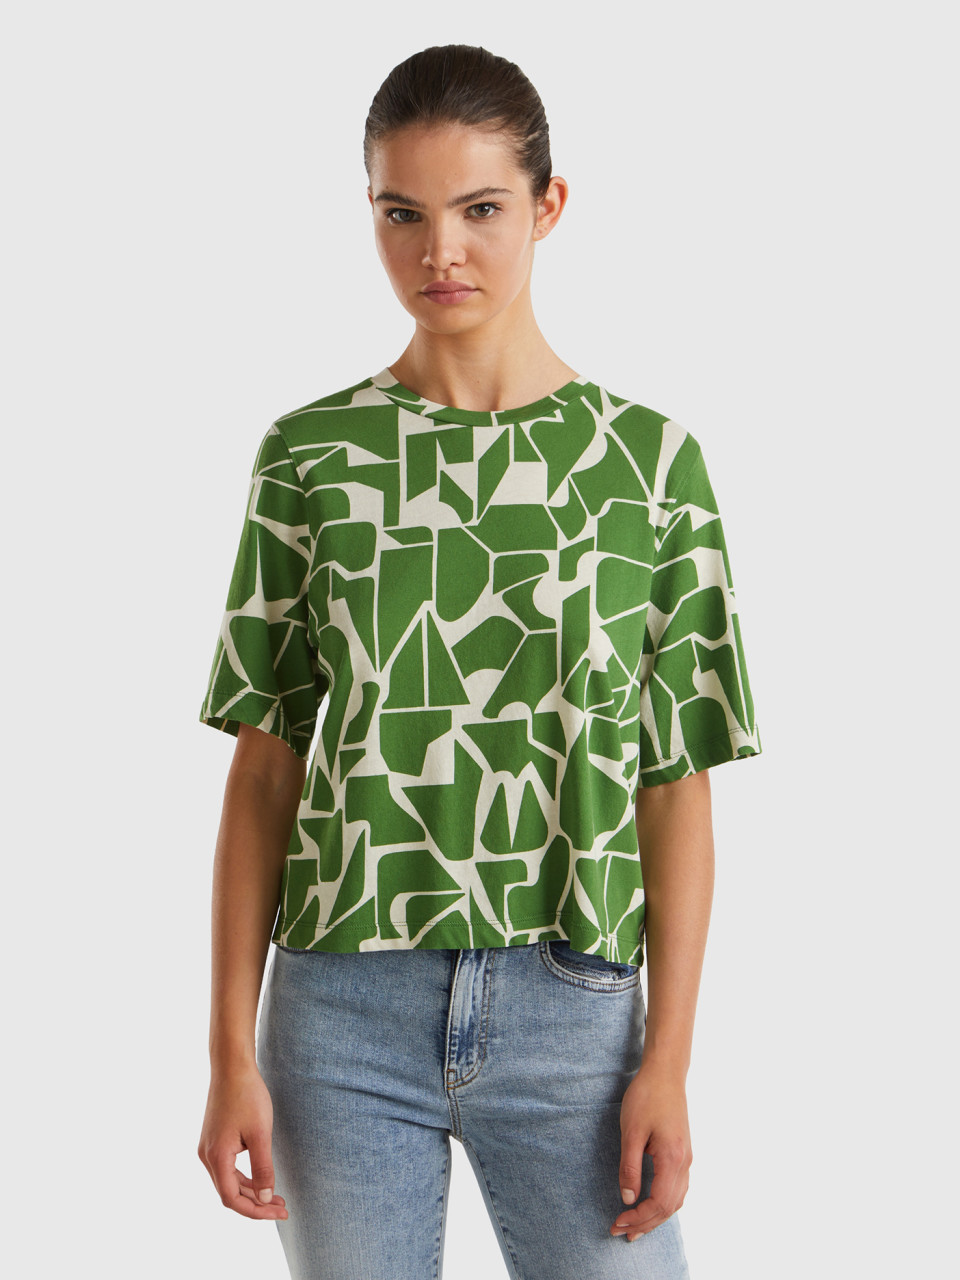 Benetton, T-shirt With Geometric Pattern, Military Green, Women